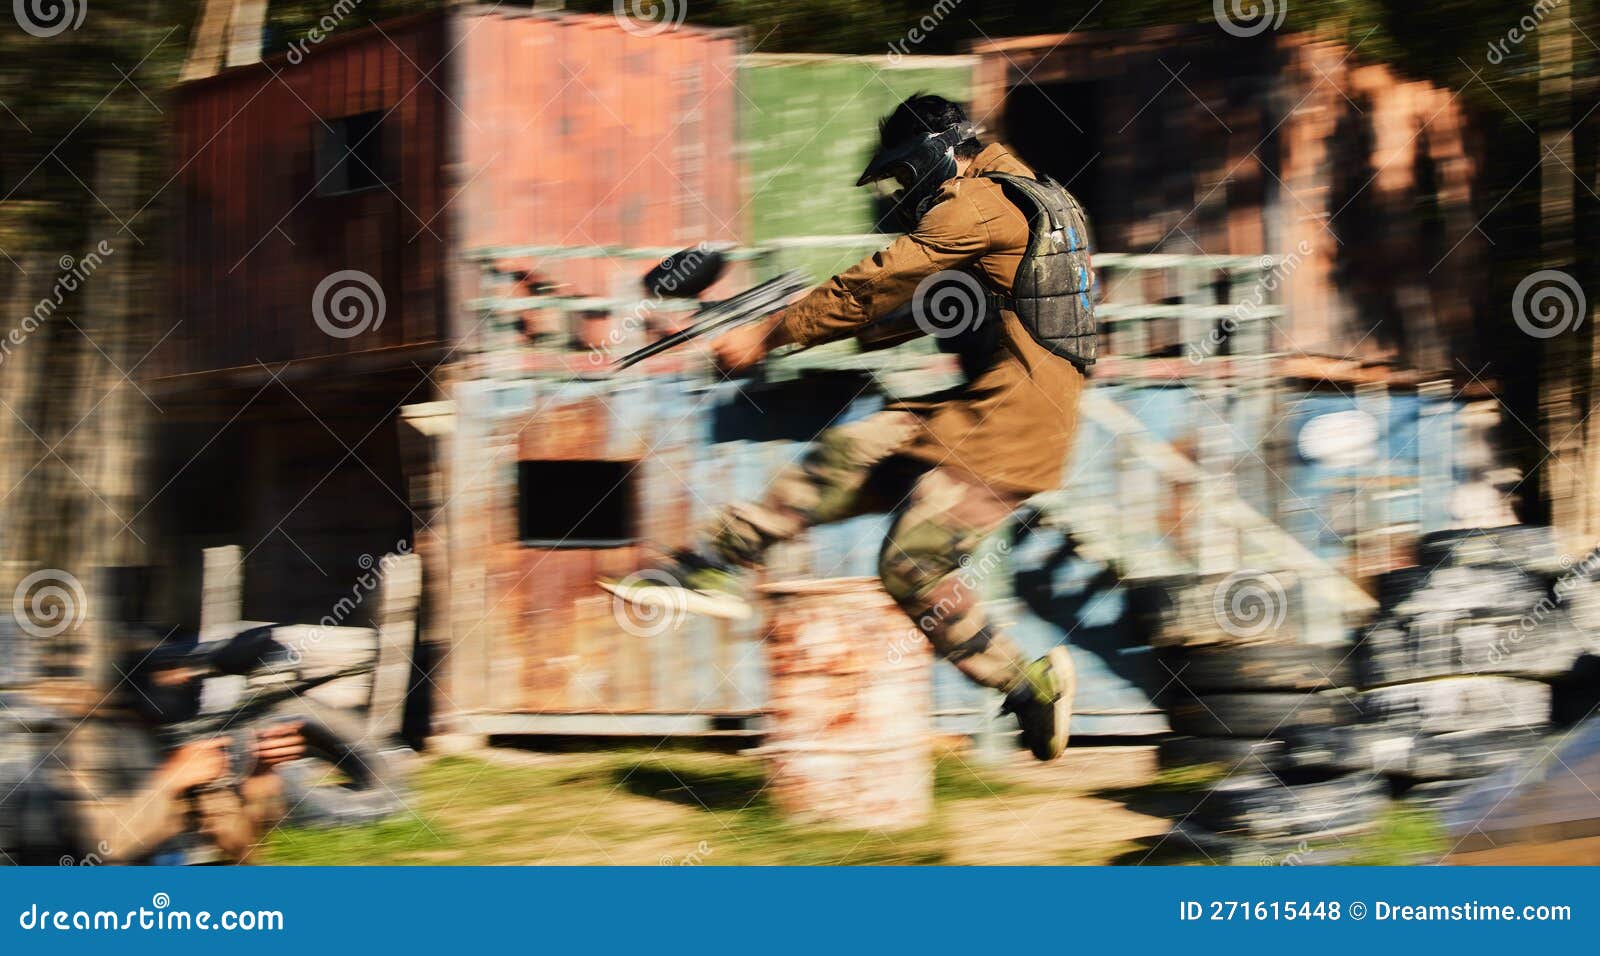 Paintball, Man Jump and Aim Gun at Target, Military Tactics at Shooting Range and War Game for Sports Outdoor